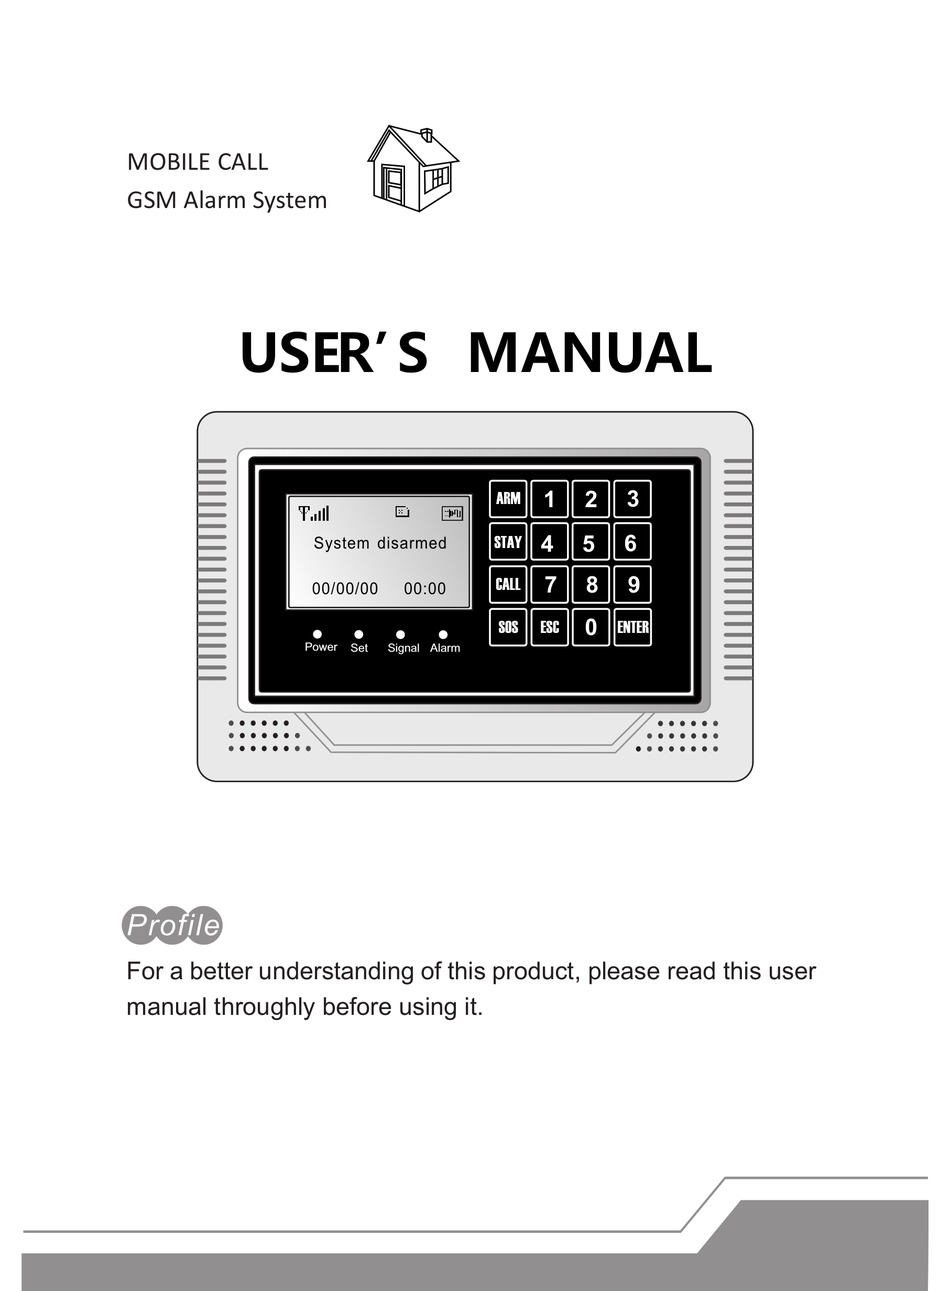 Android user manual. User manual инструкция. User s manual. GSM Alarm System инструкция. User,s manual инструкция.